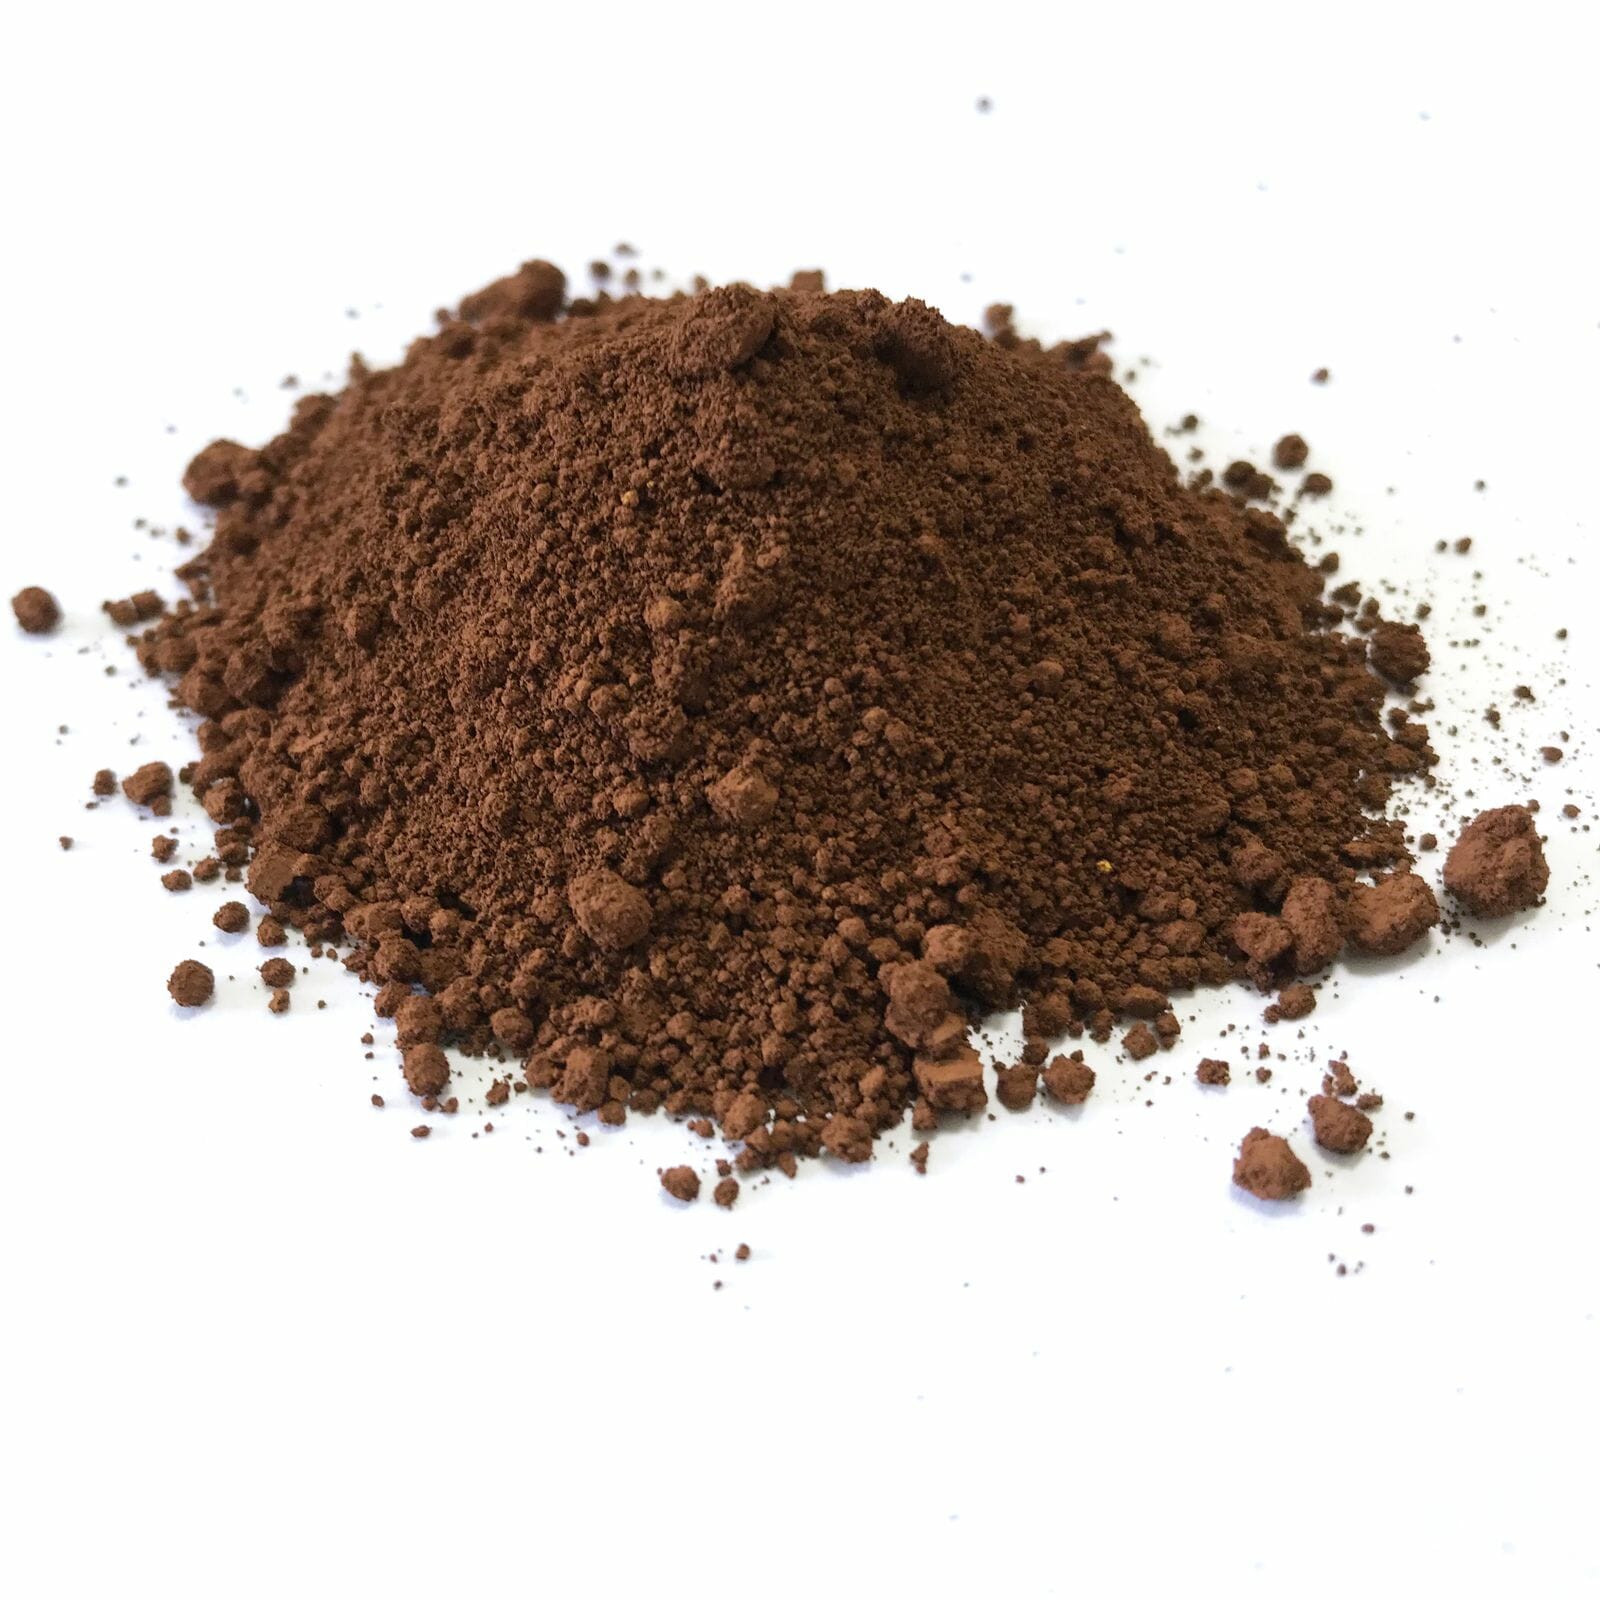 321 - Dark Brown – Raw Pigment for Concrete - Cement Colors